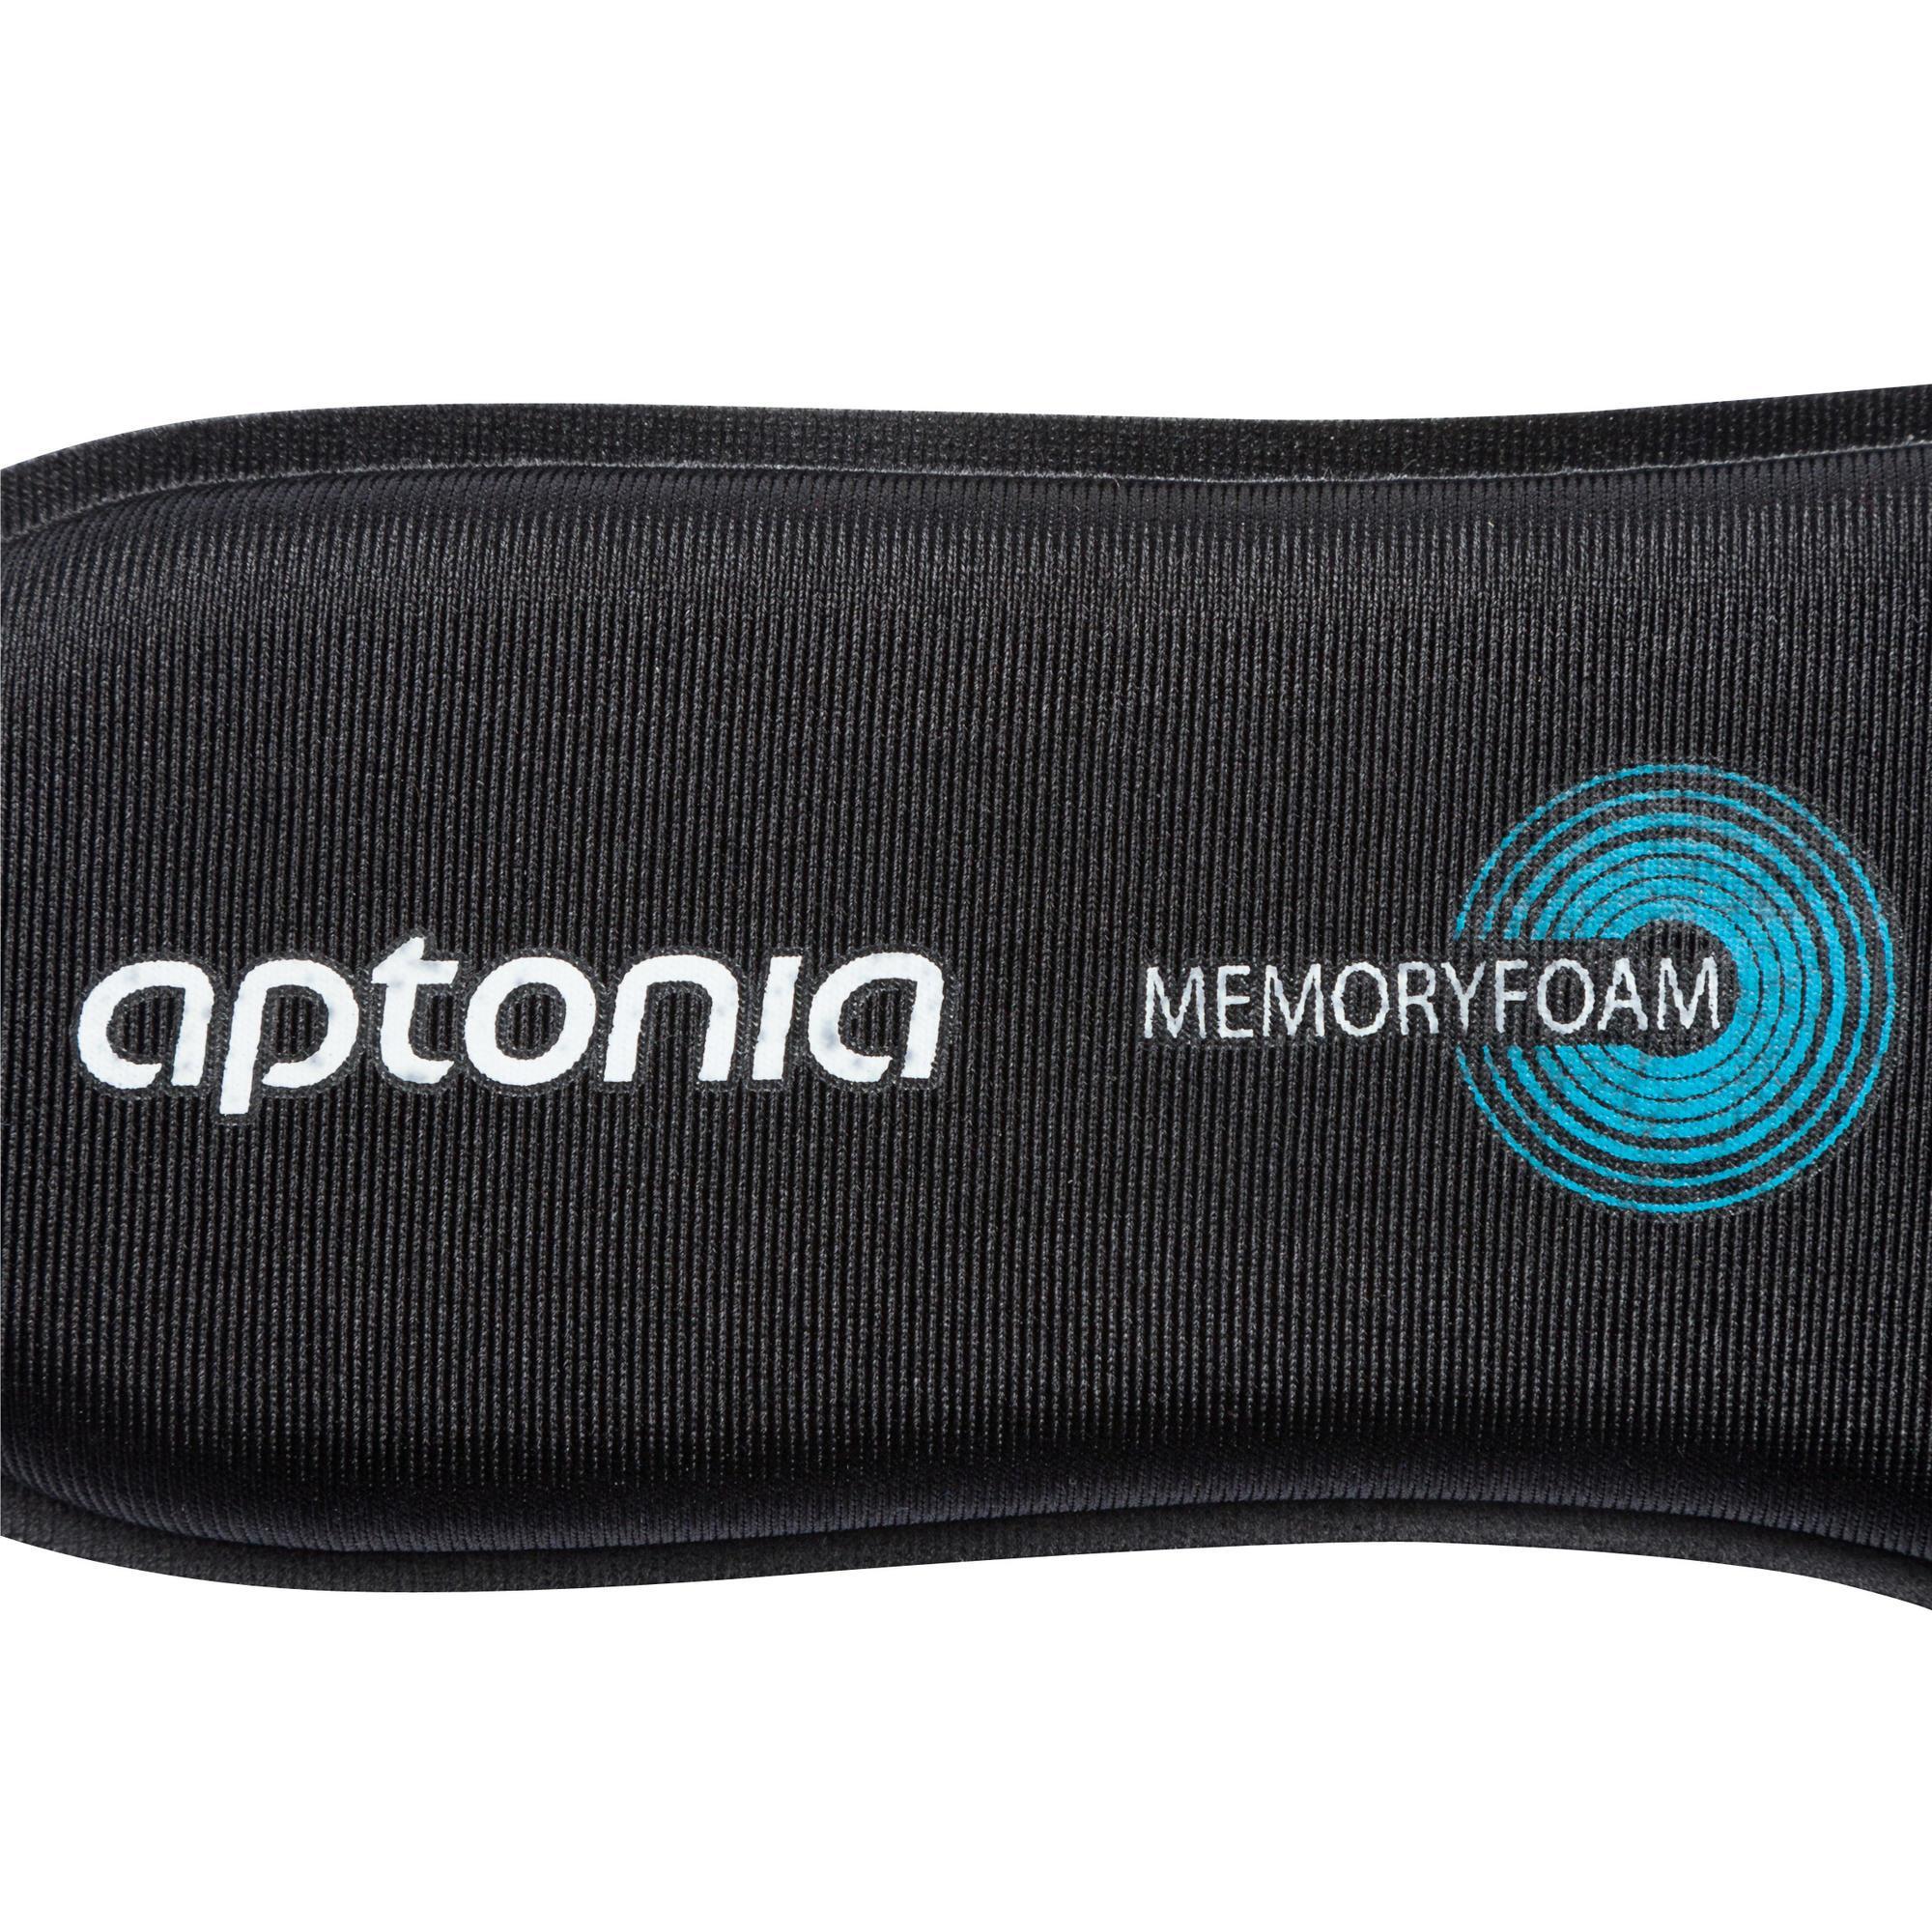 aptonia walk 300 memory foam